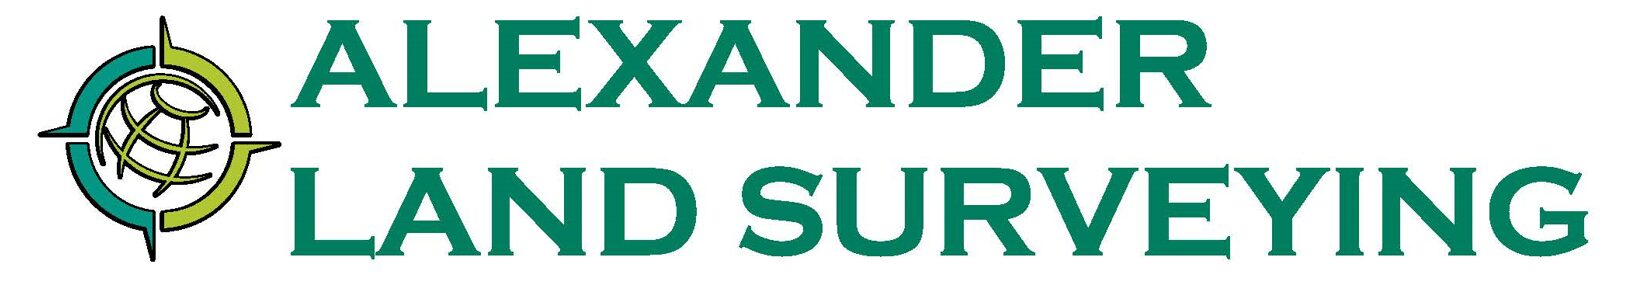 Alexander Land Surveying Logo V2.jpg ‎- Photos